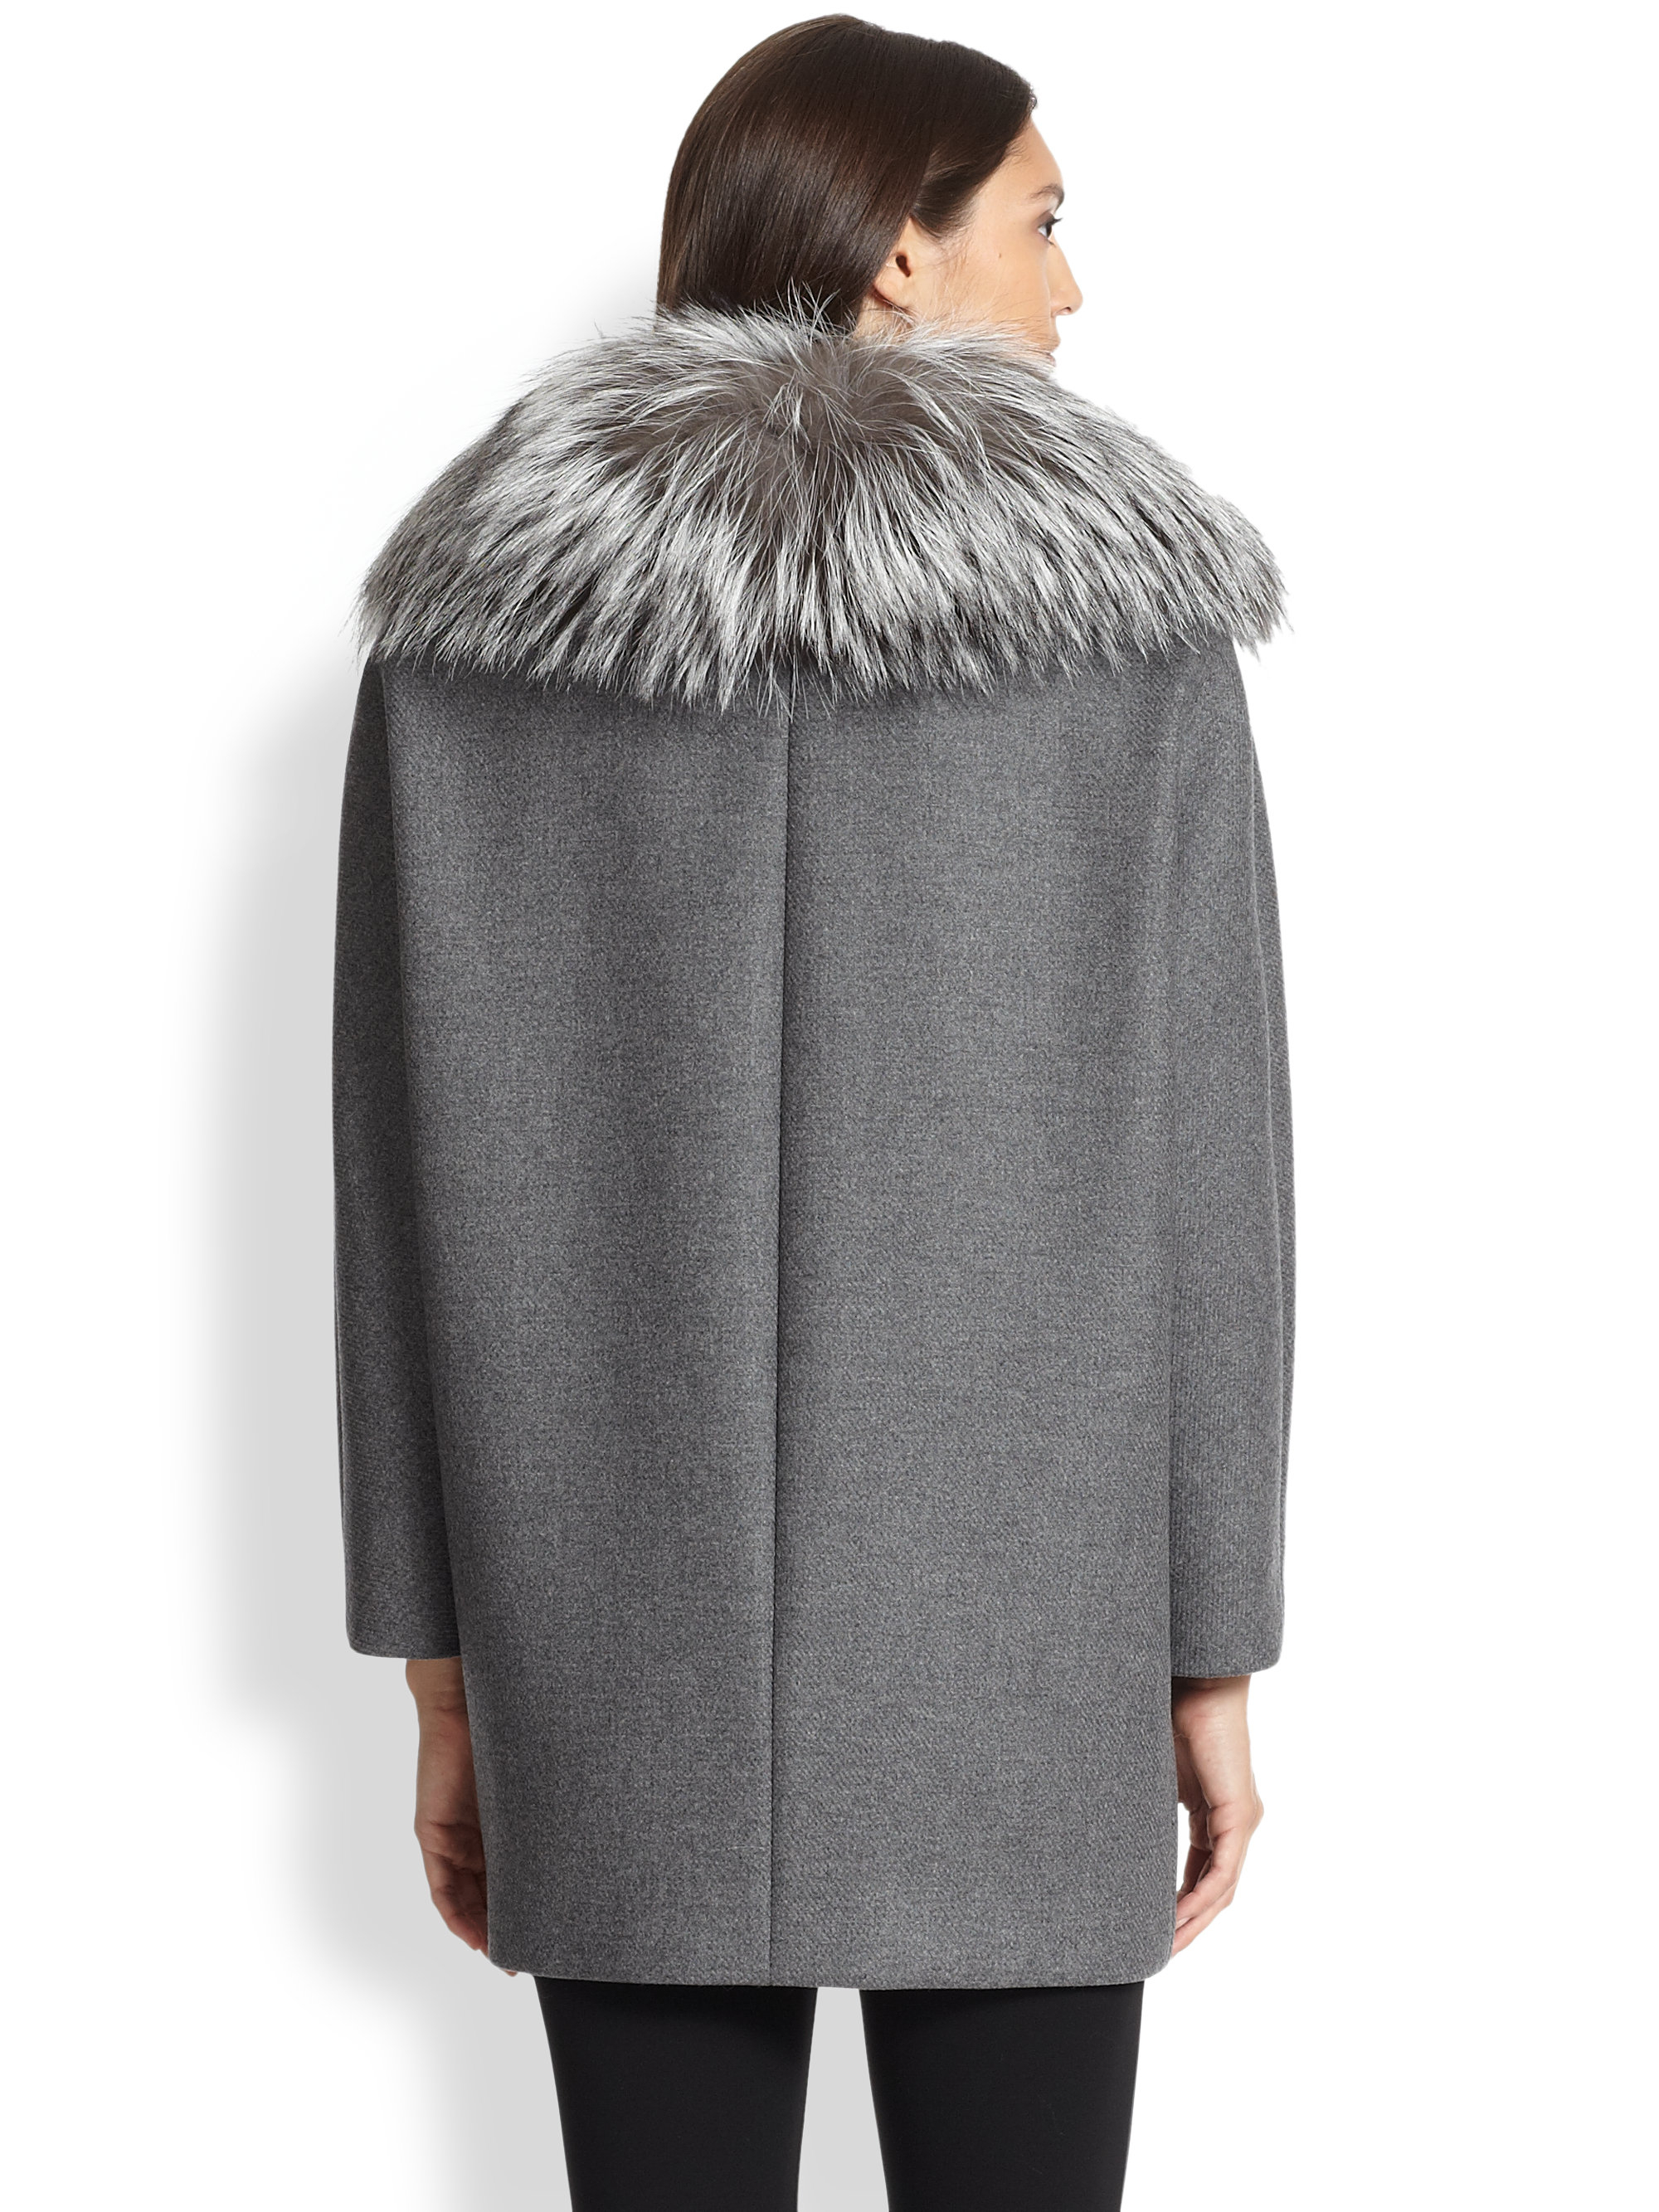 Lyst - Max Mara Fur-Collar Wool & Cashmere Coat in Gray